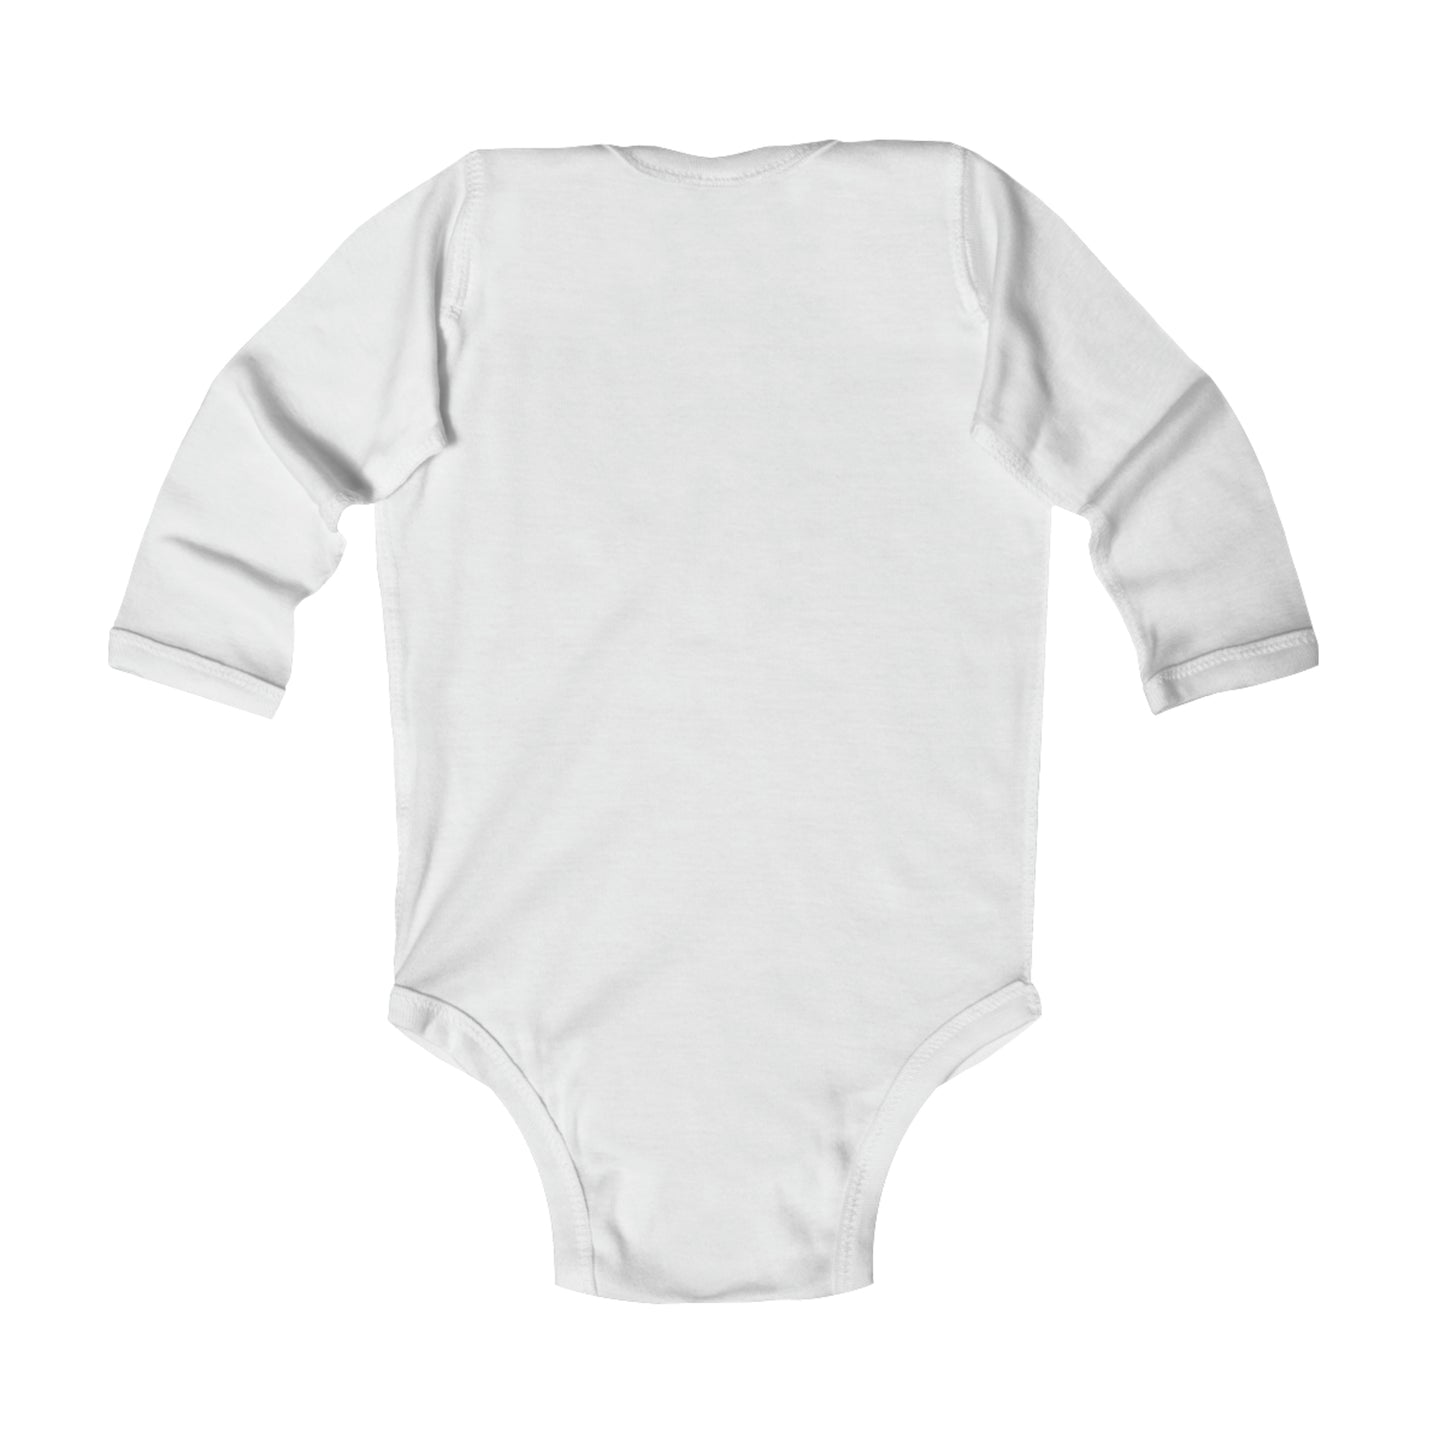 Little Miss Shenanigans | St. Patrick's Day Baby Bodysuit | Gender-Neutral Long-Sleeve Baby BodySuit